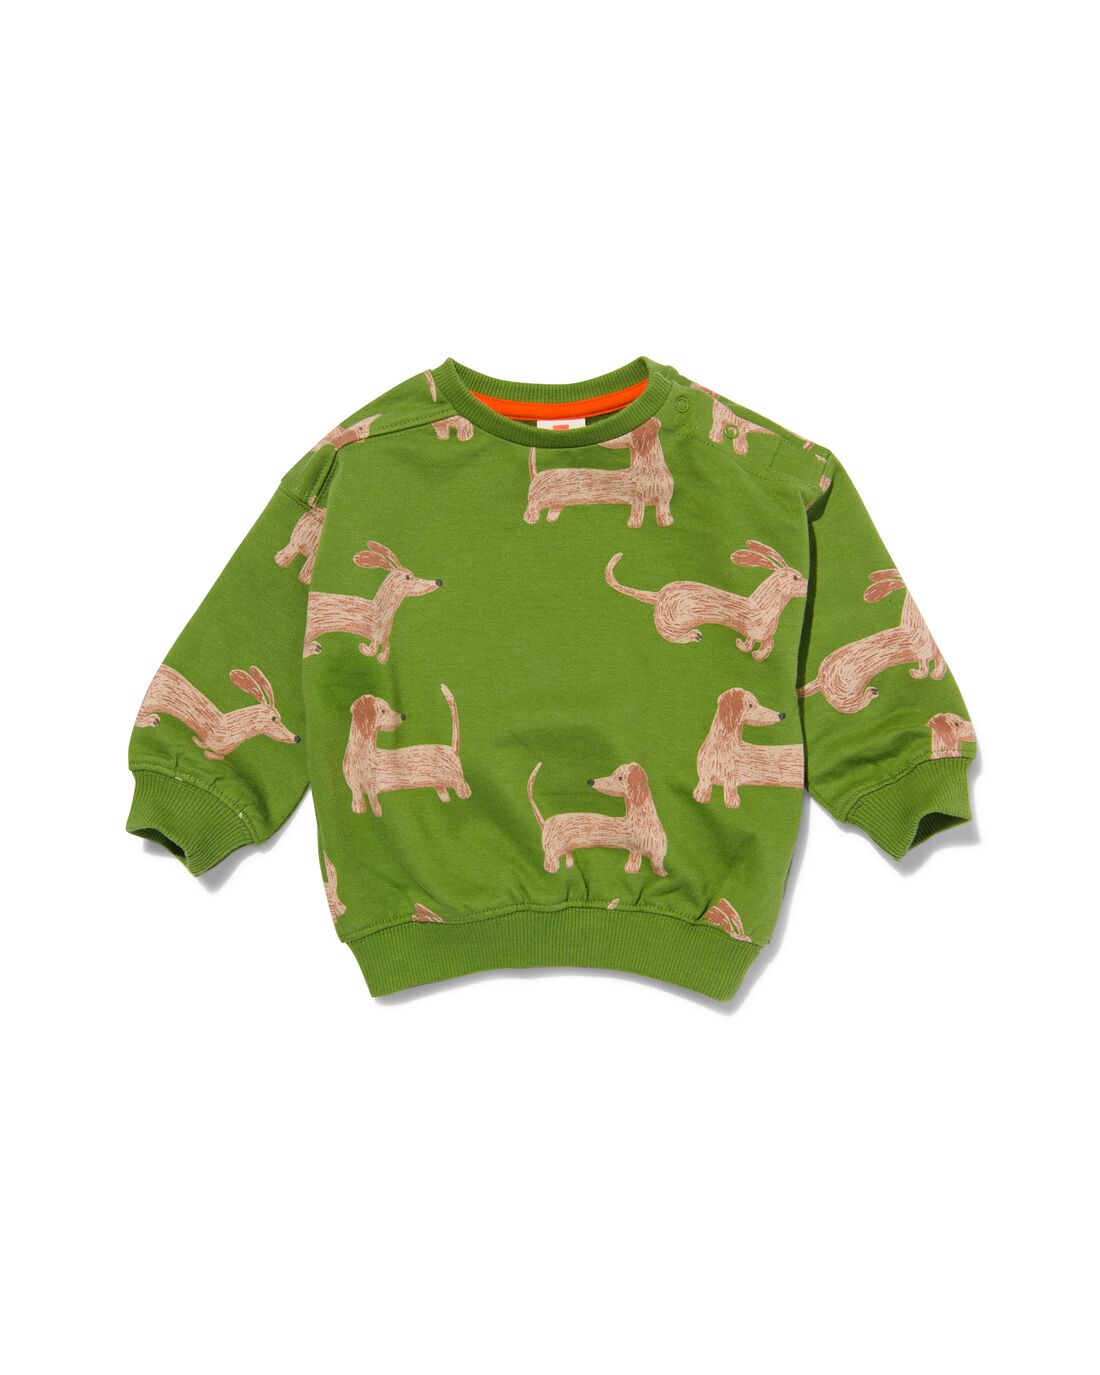 HEMA Baby Sweater Hond Groen (groen)